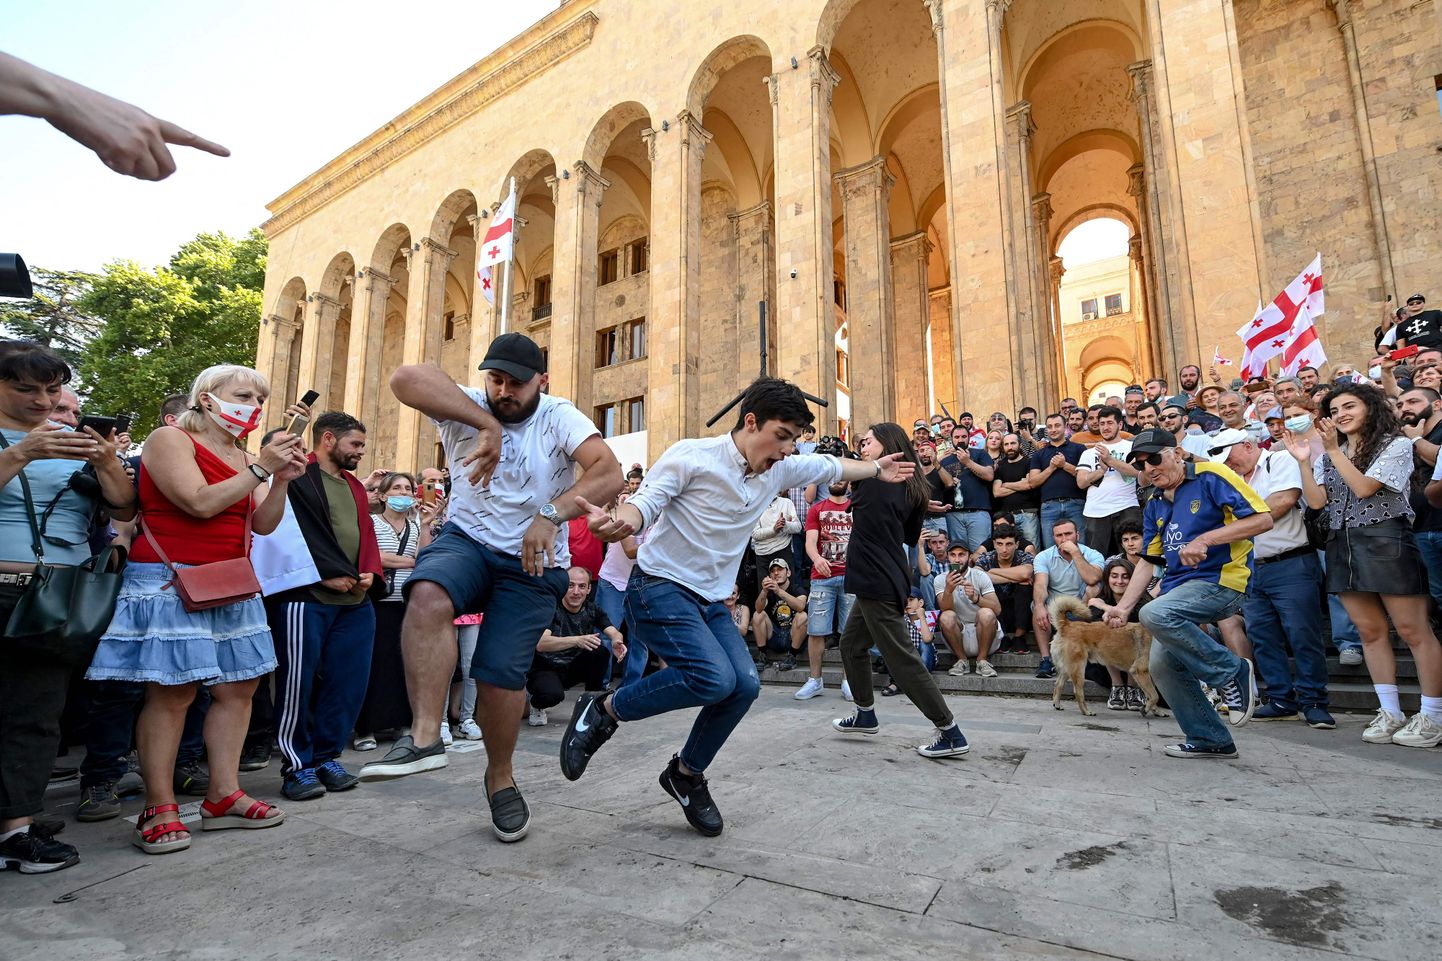 Gruusia LGBTQ marsi vastu protestijad Thbilisis tantsu löömas.